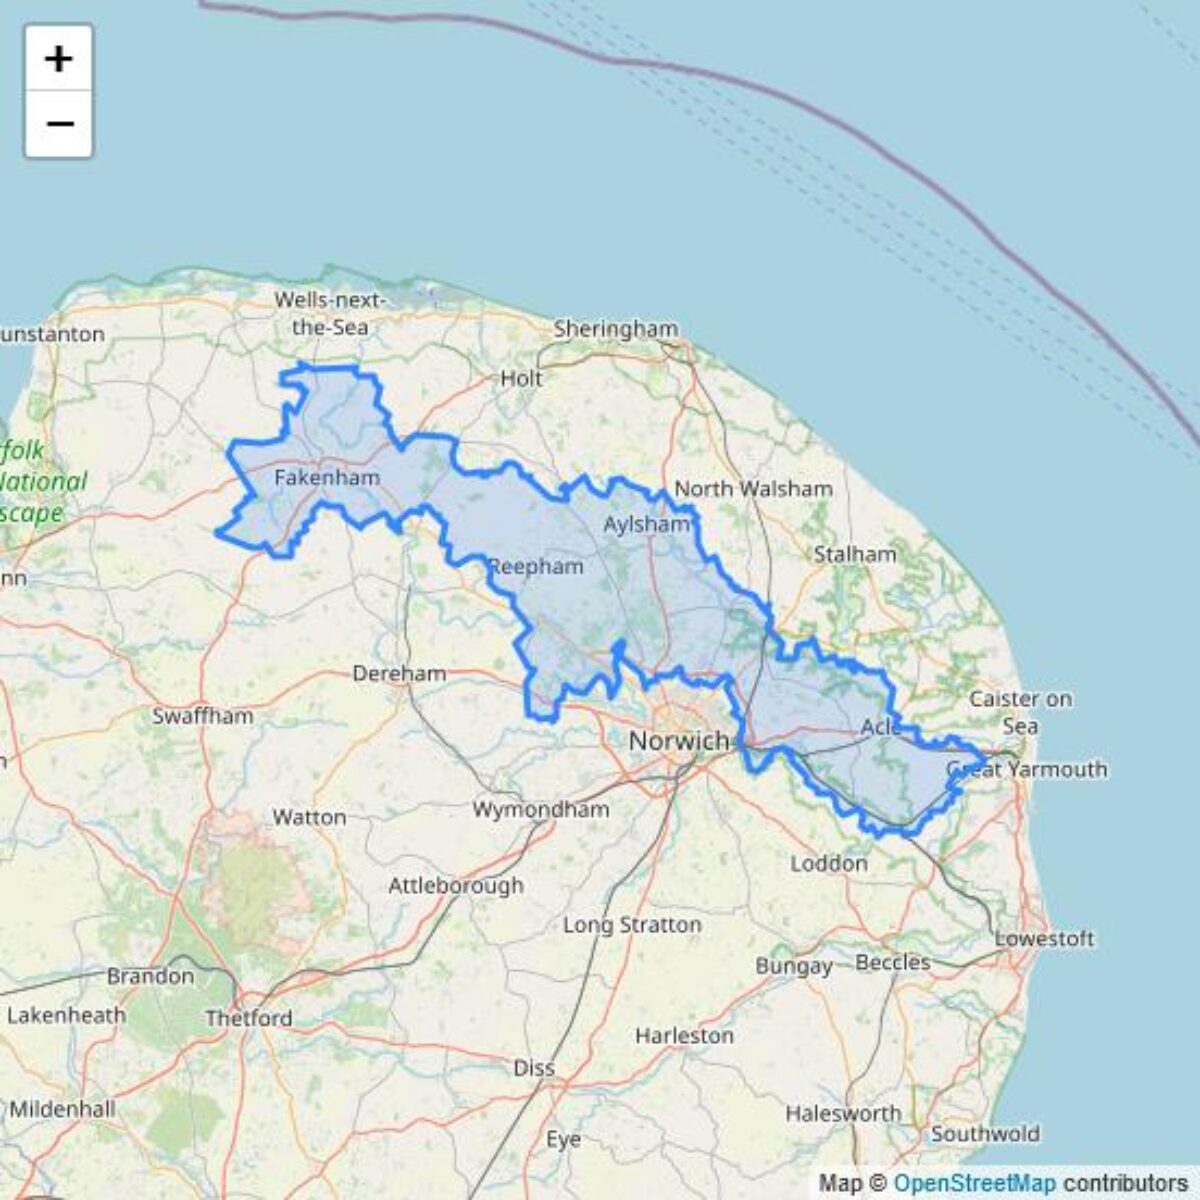 Broadland and Fakenham Parliamentary Constituency -- https://mapit.mysociety.org/area/168401.html